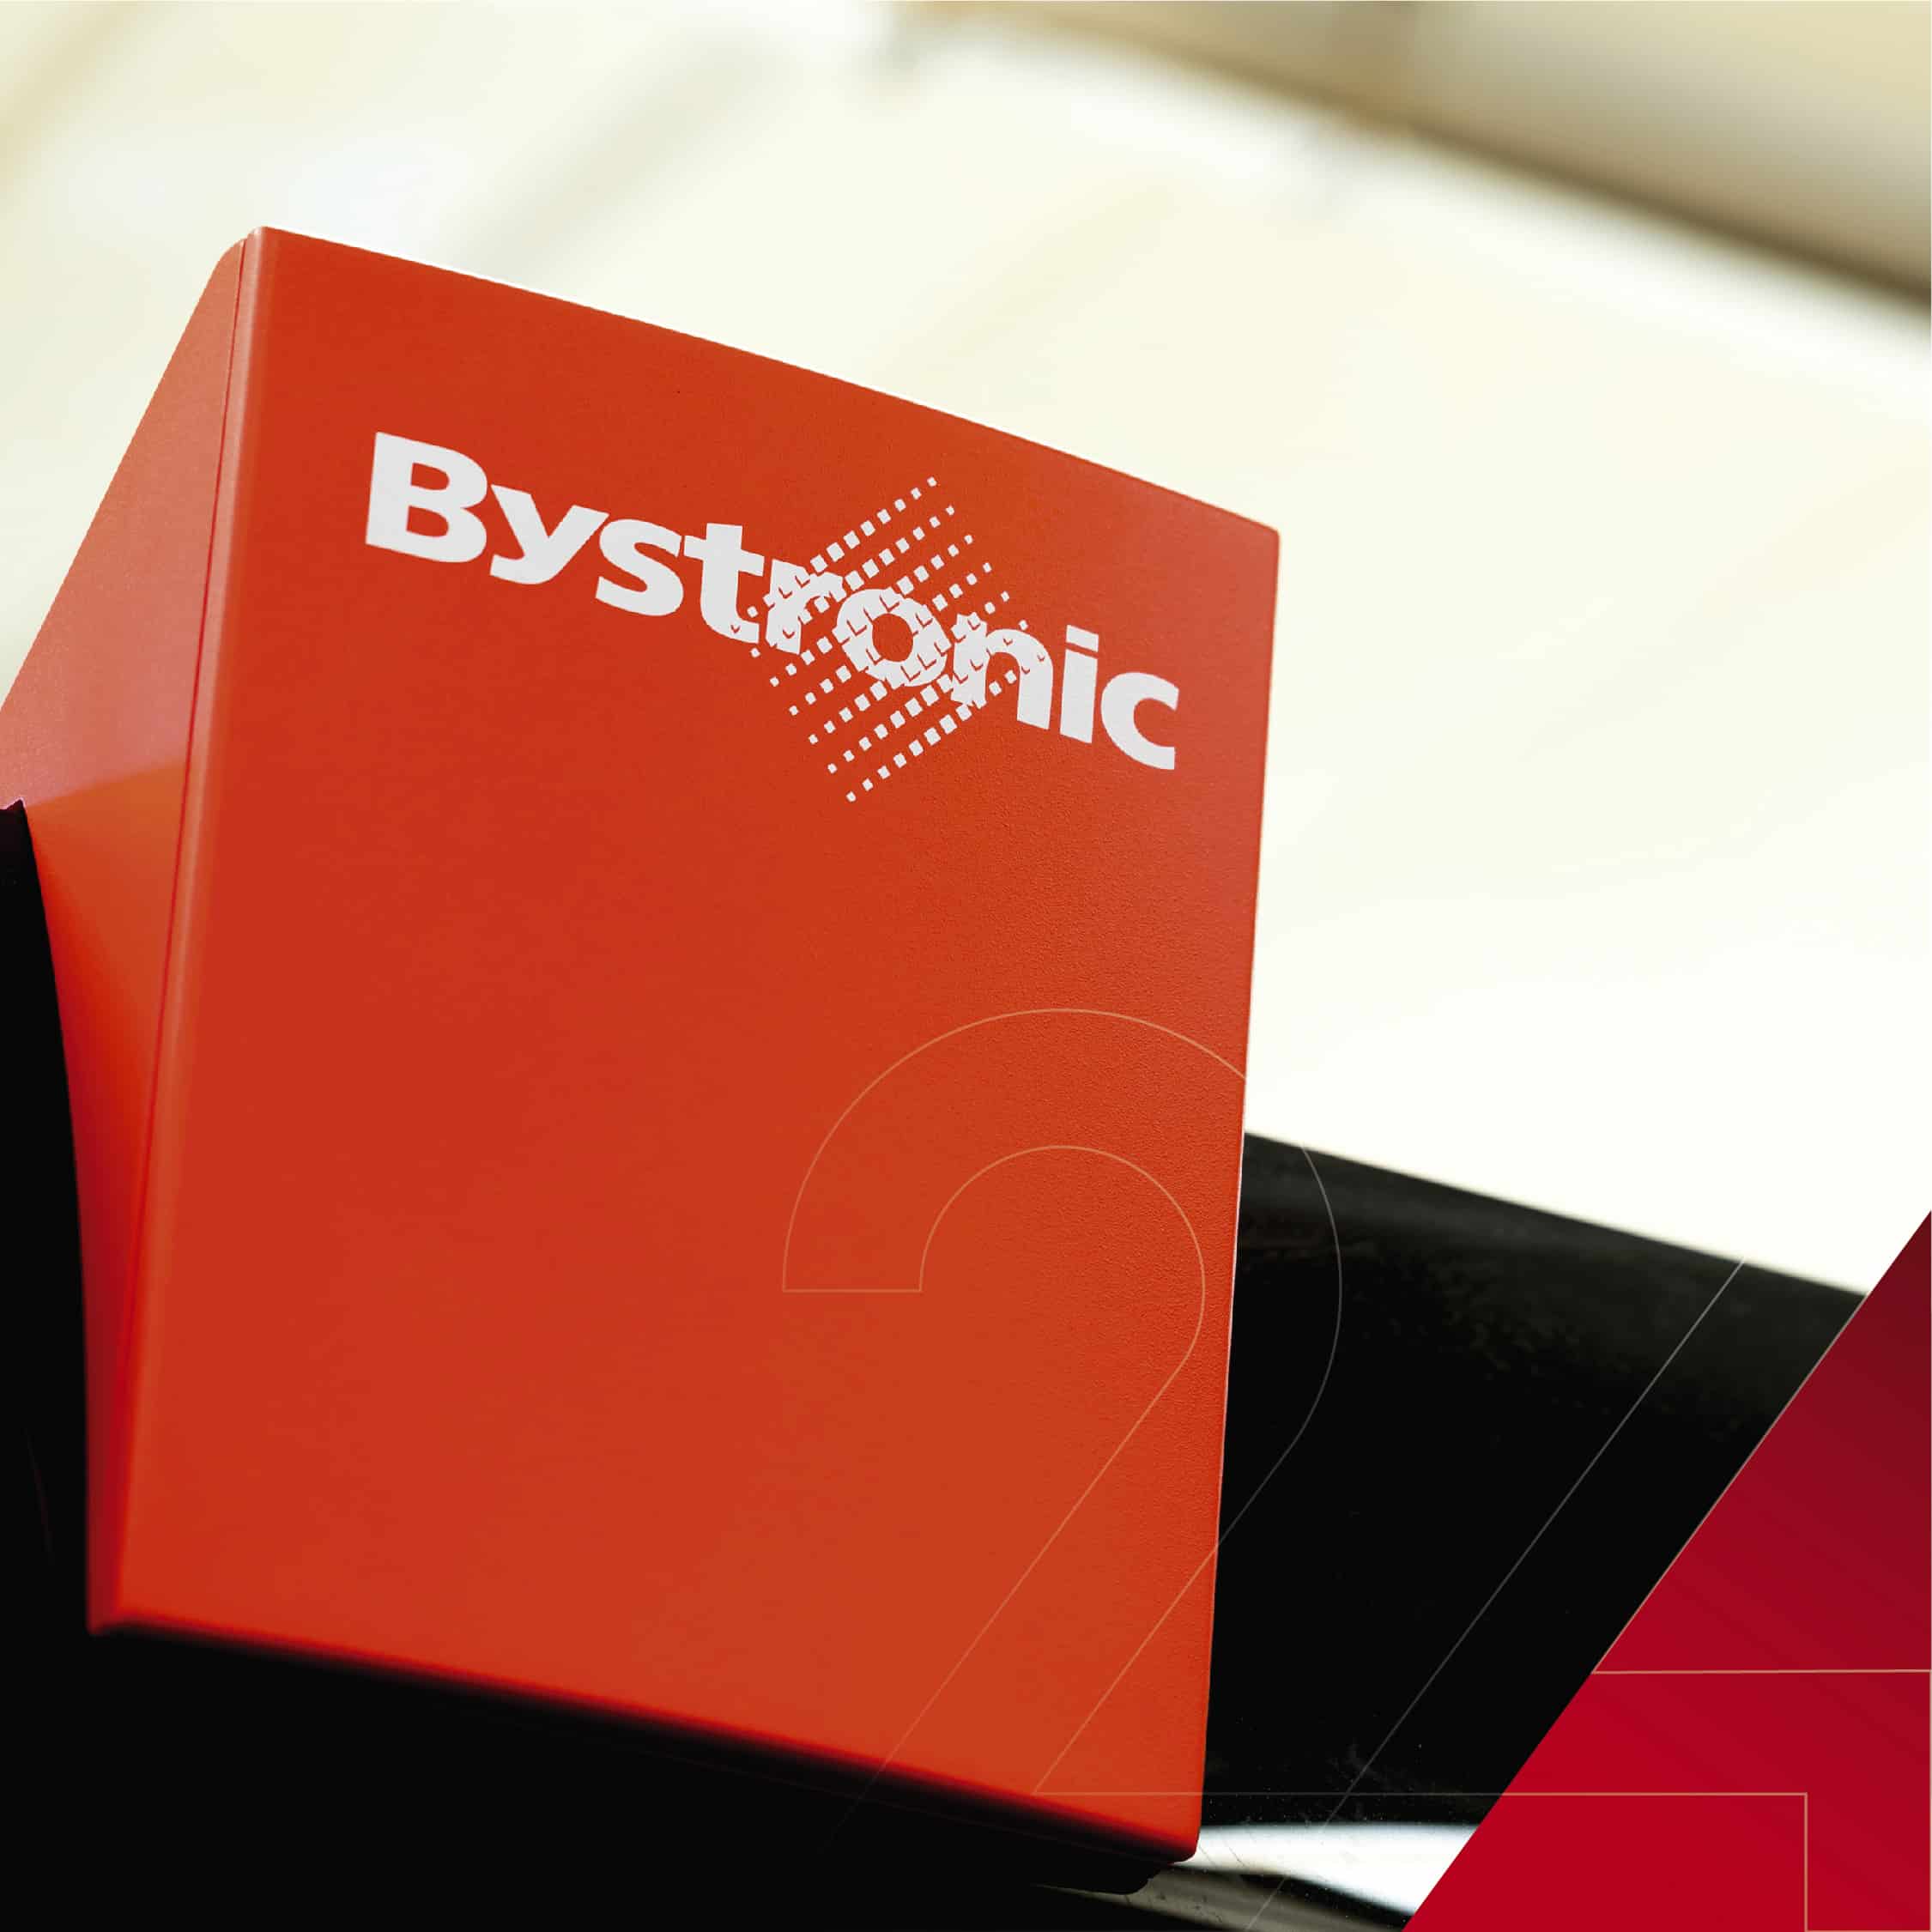 Bystronic logo on machine